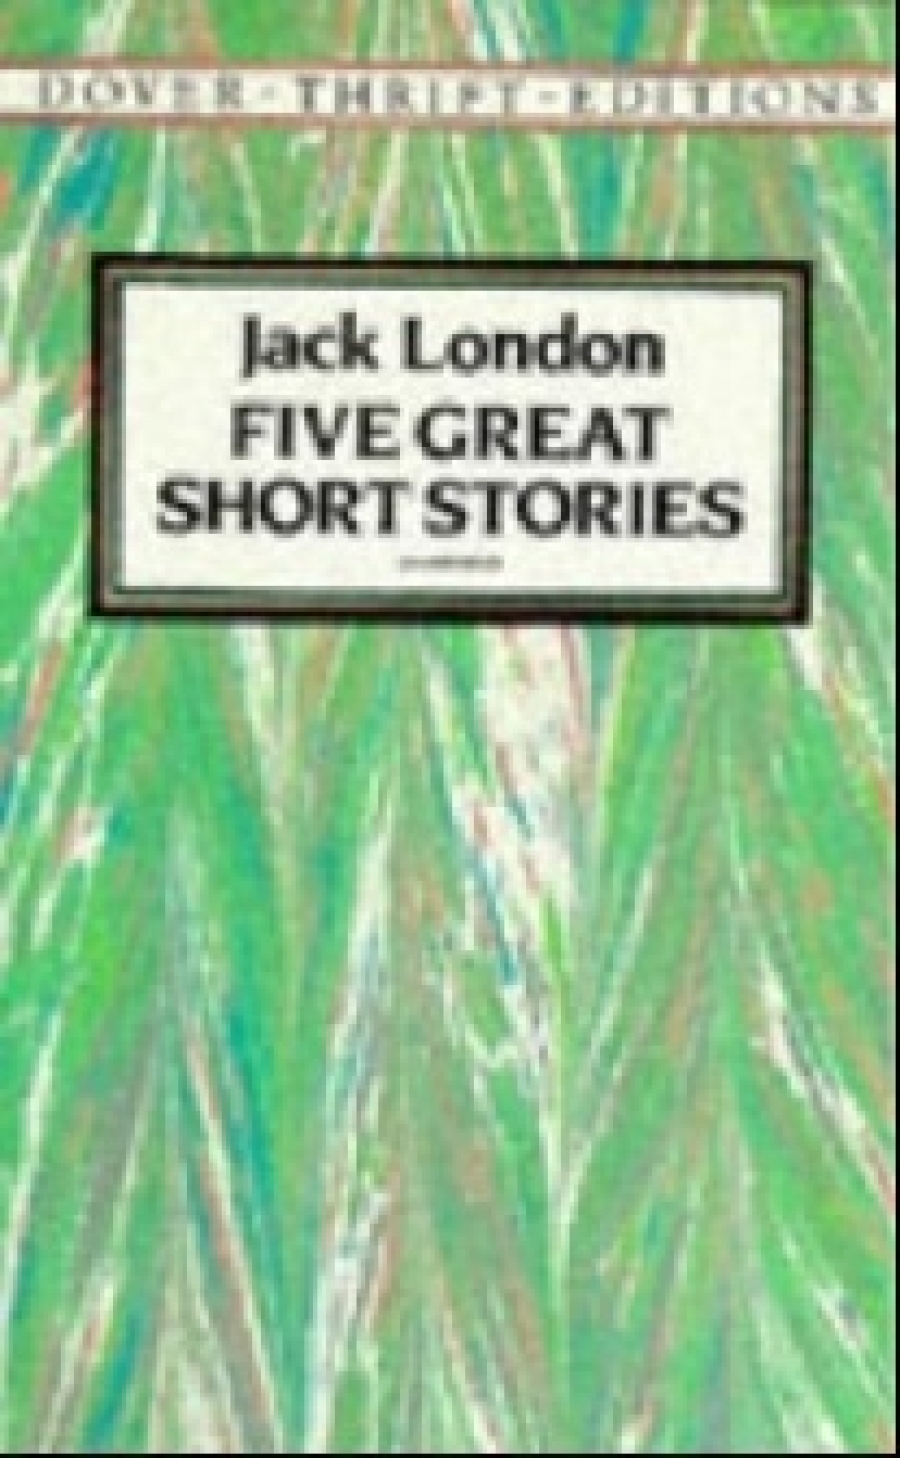 London London Five Great Short Stories 